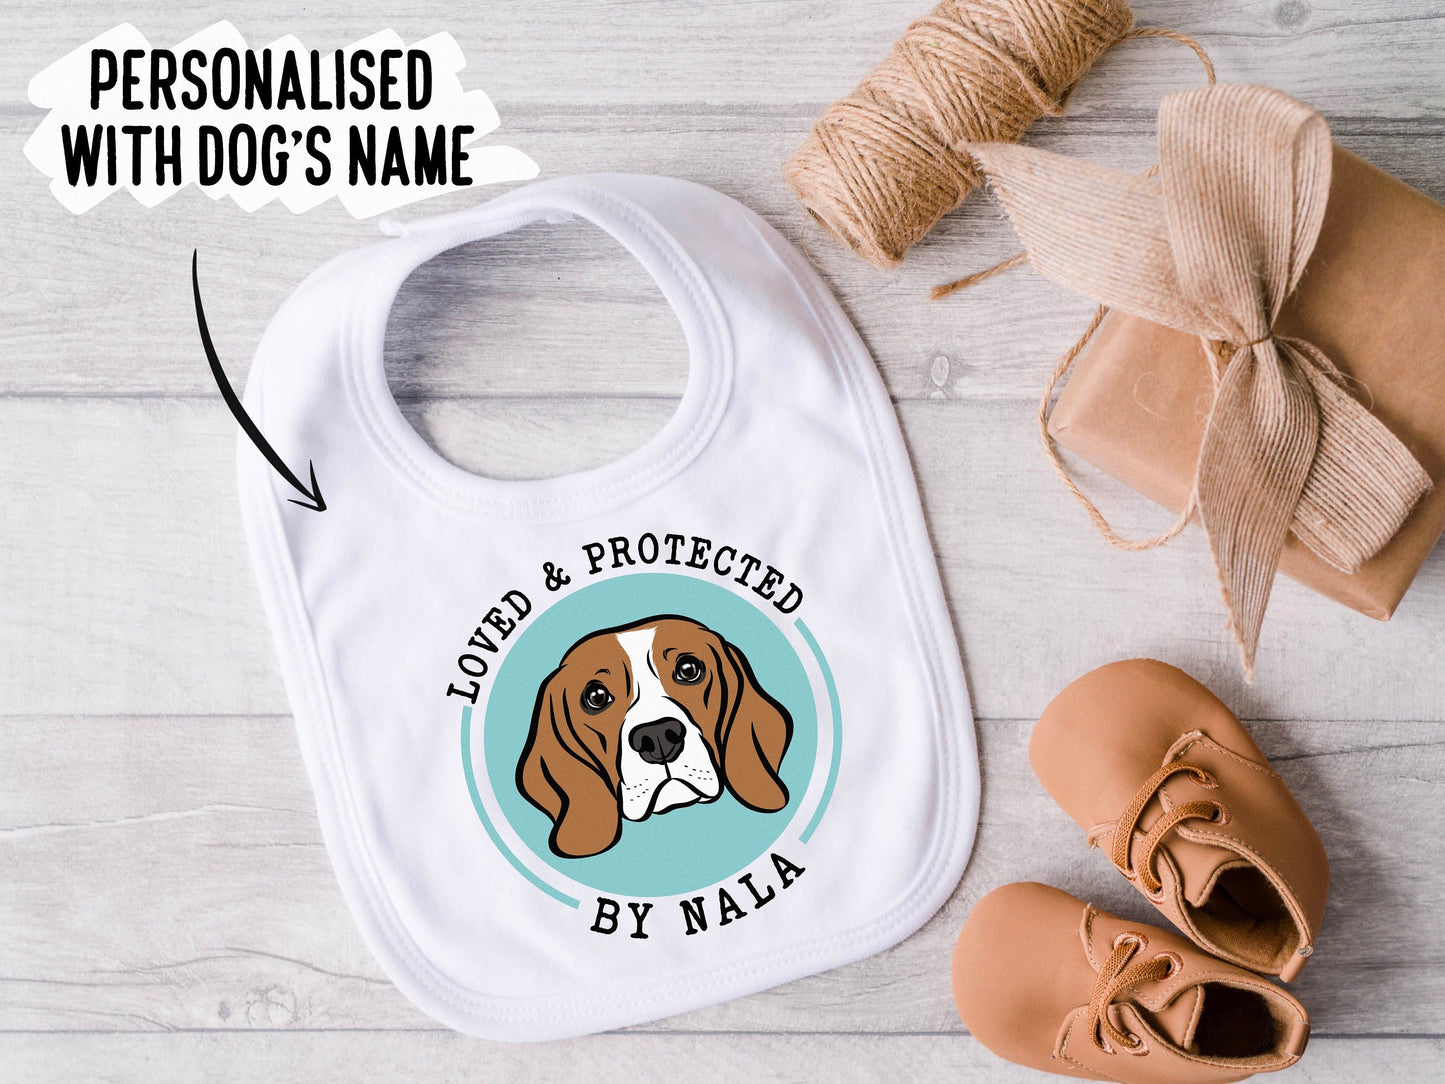 Personalised Beagle Baby Bib